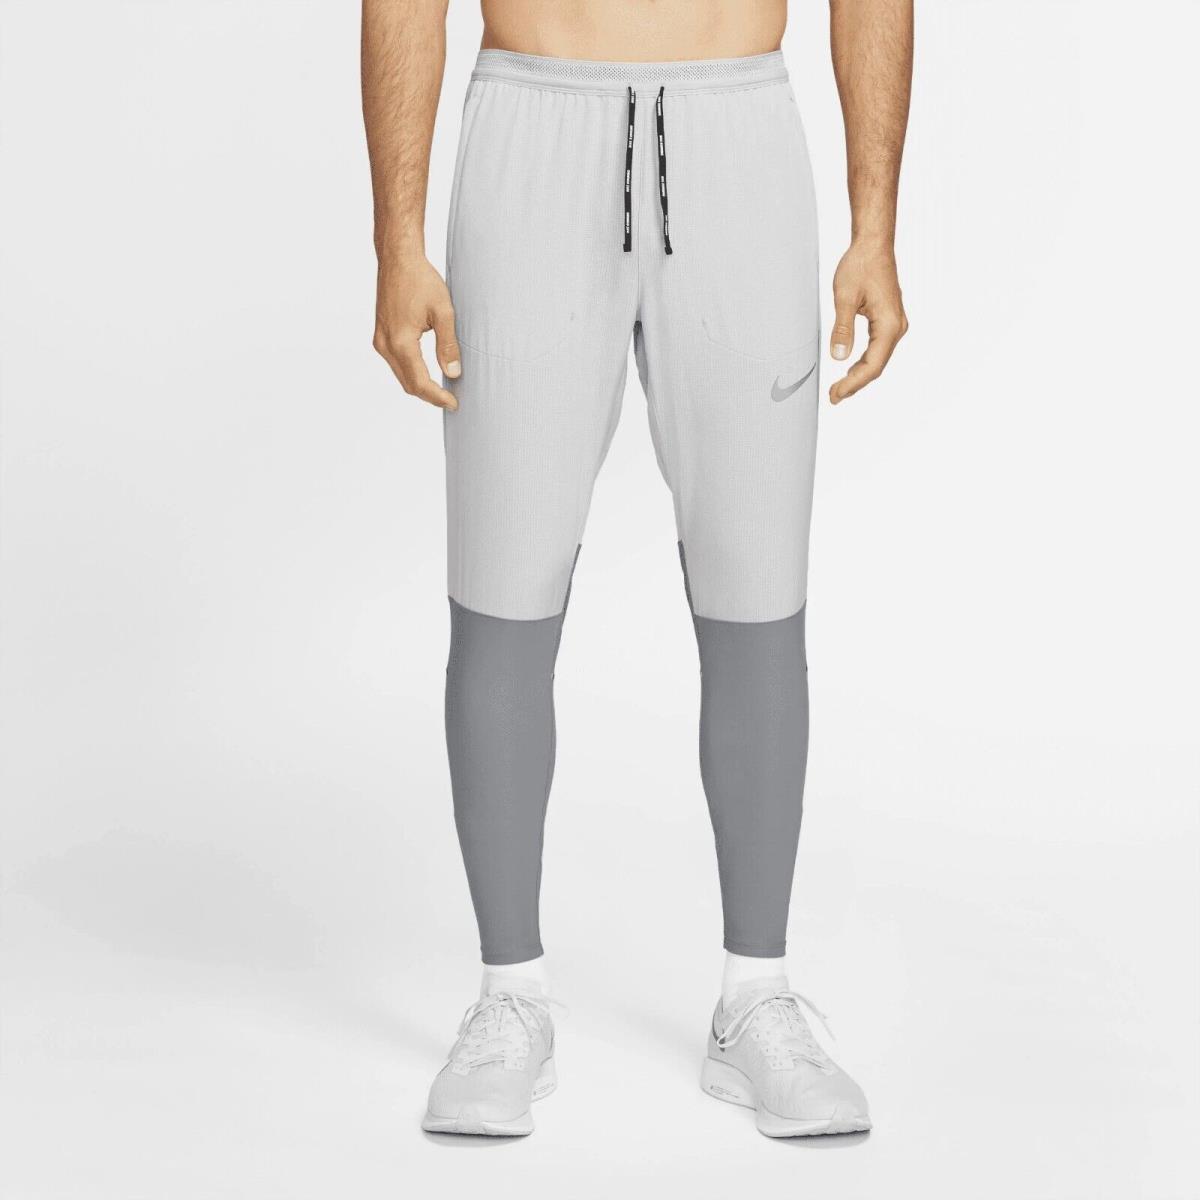 Nike Flex Swift Running Pants Joggers Light Gray Reflective Slim Fit Medium